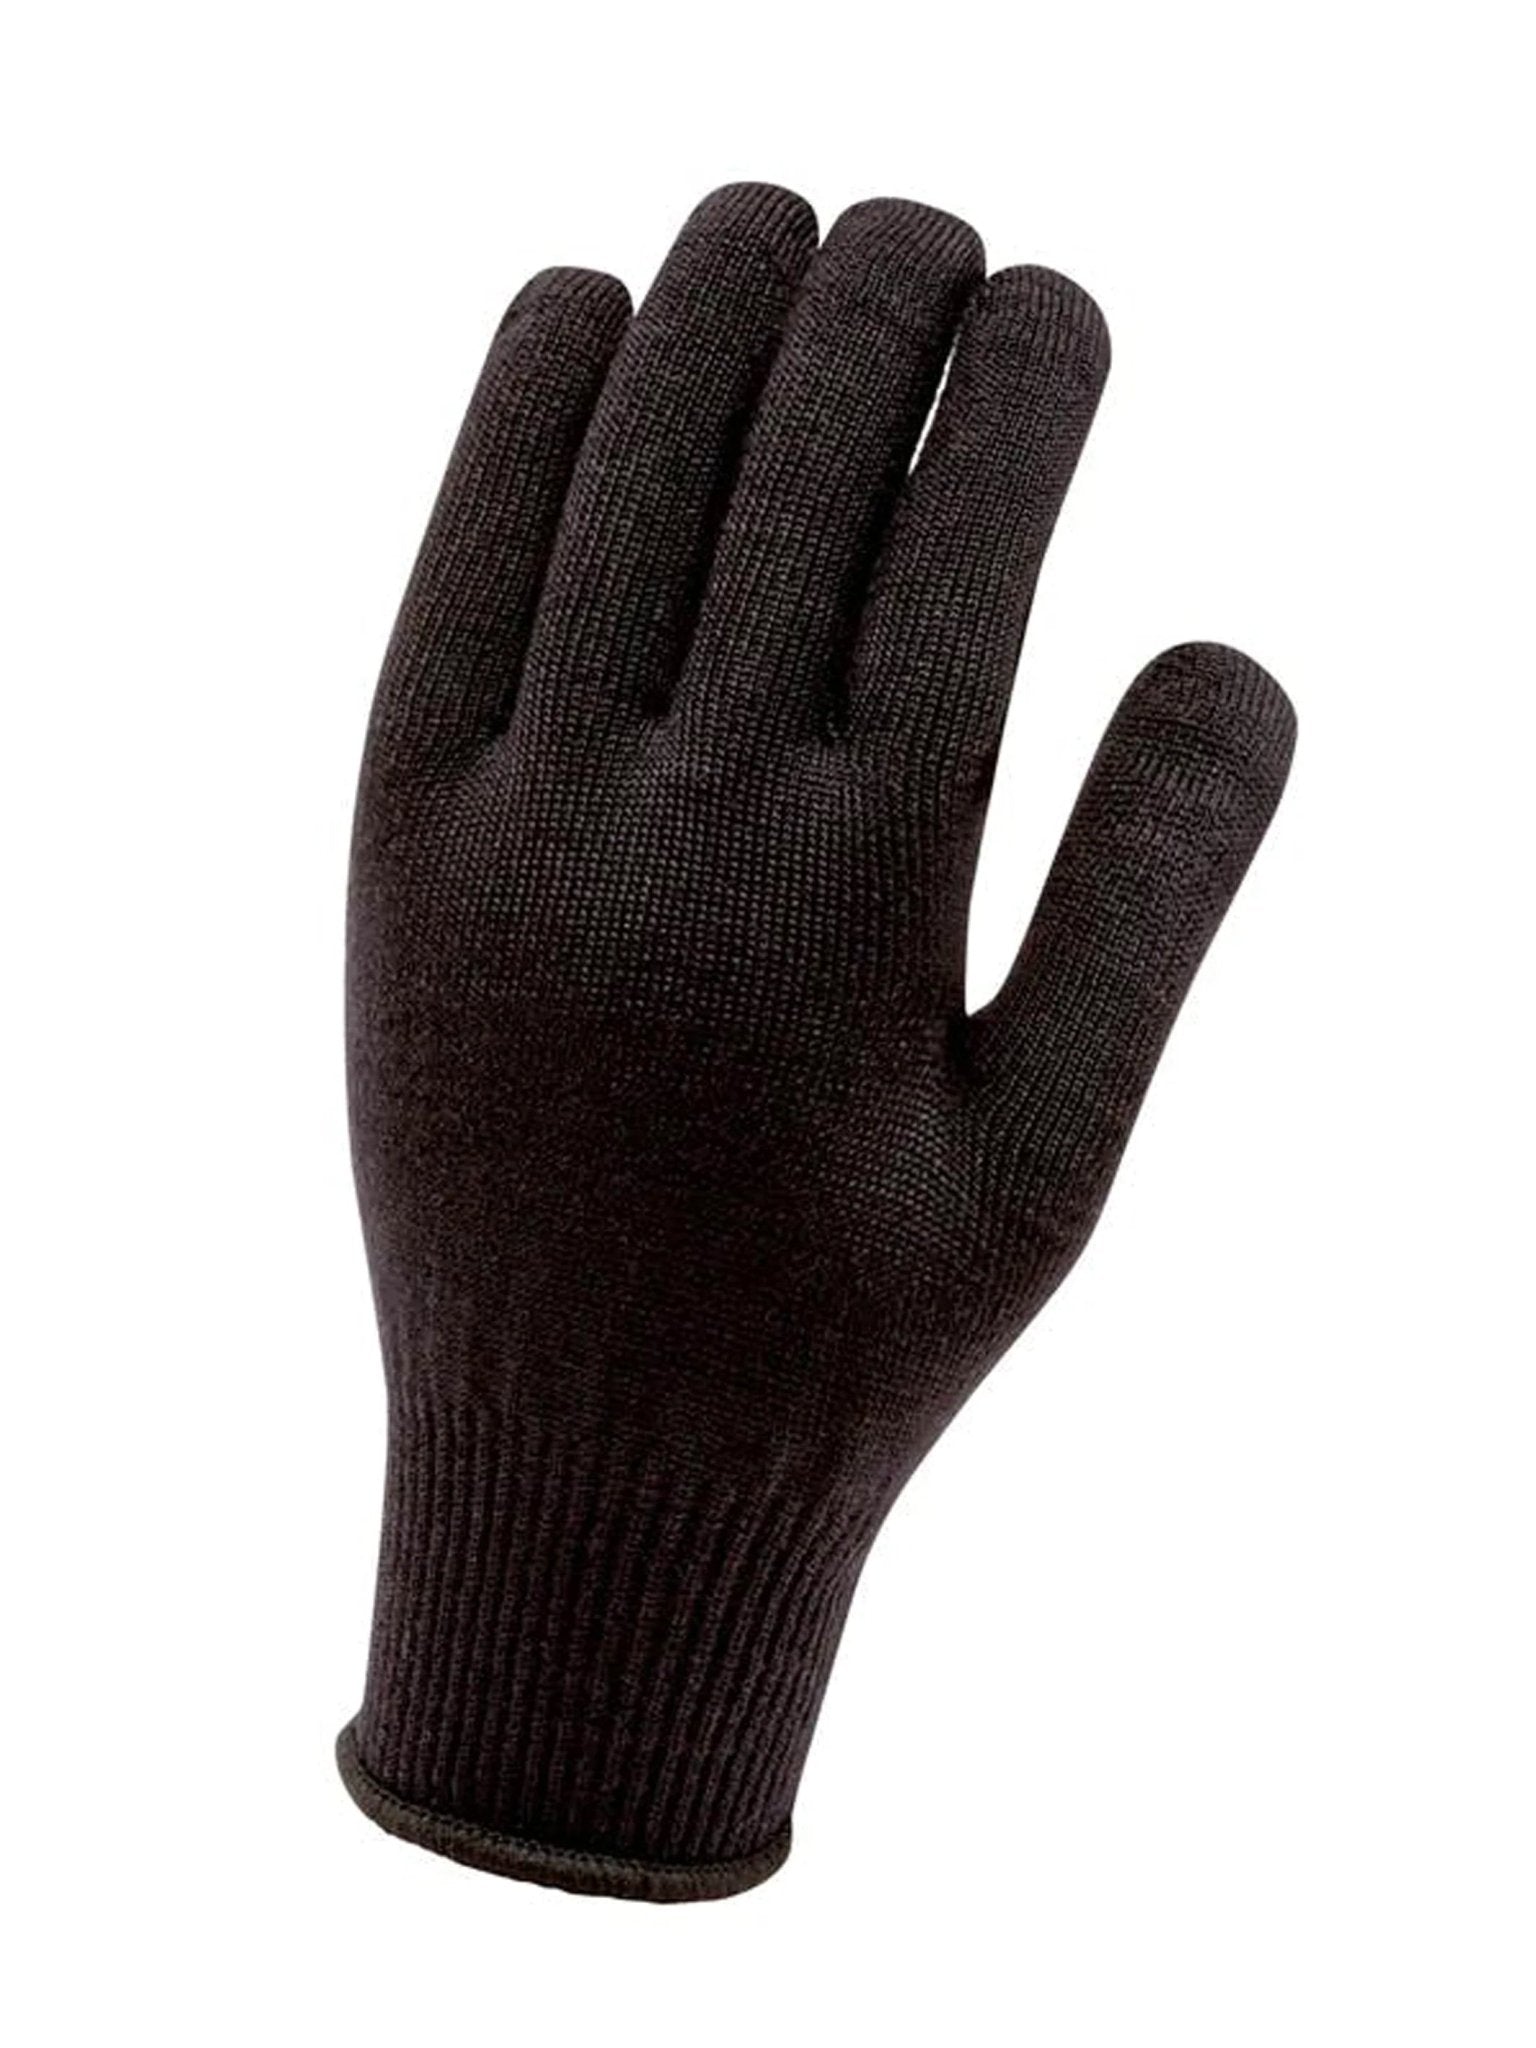 4elementsclothingSealSkinzSealSkinz - Merino Gloves / Solo Merino Liner Glove Pair - StodyGloves12100089000100